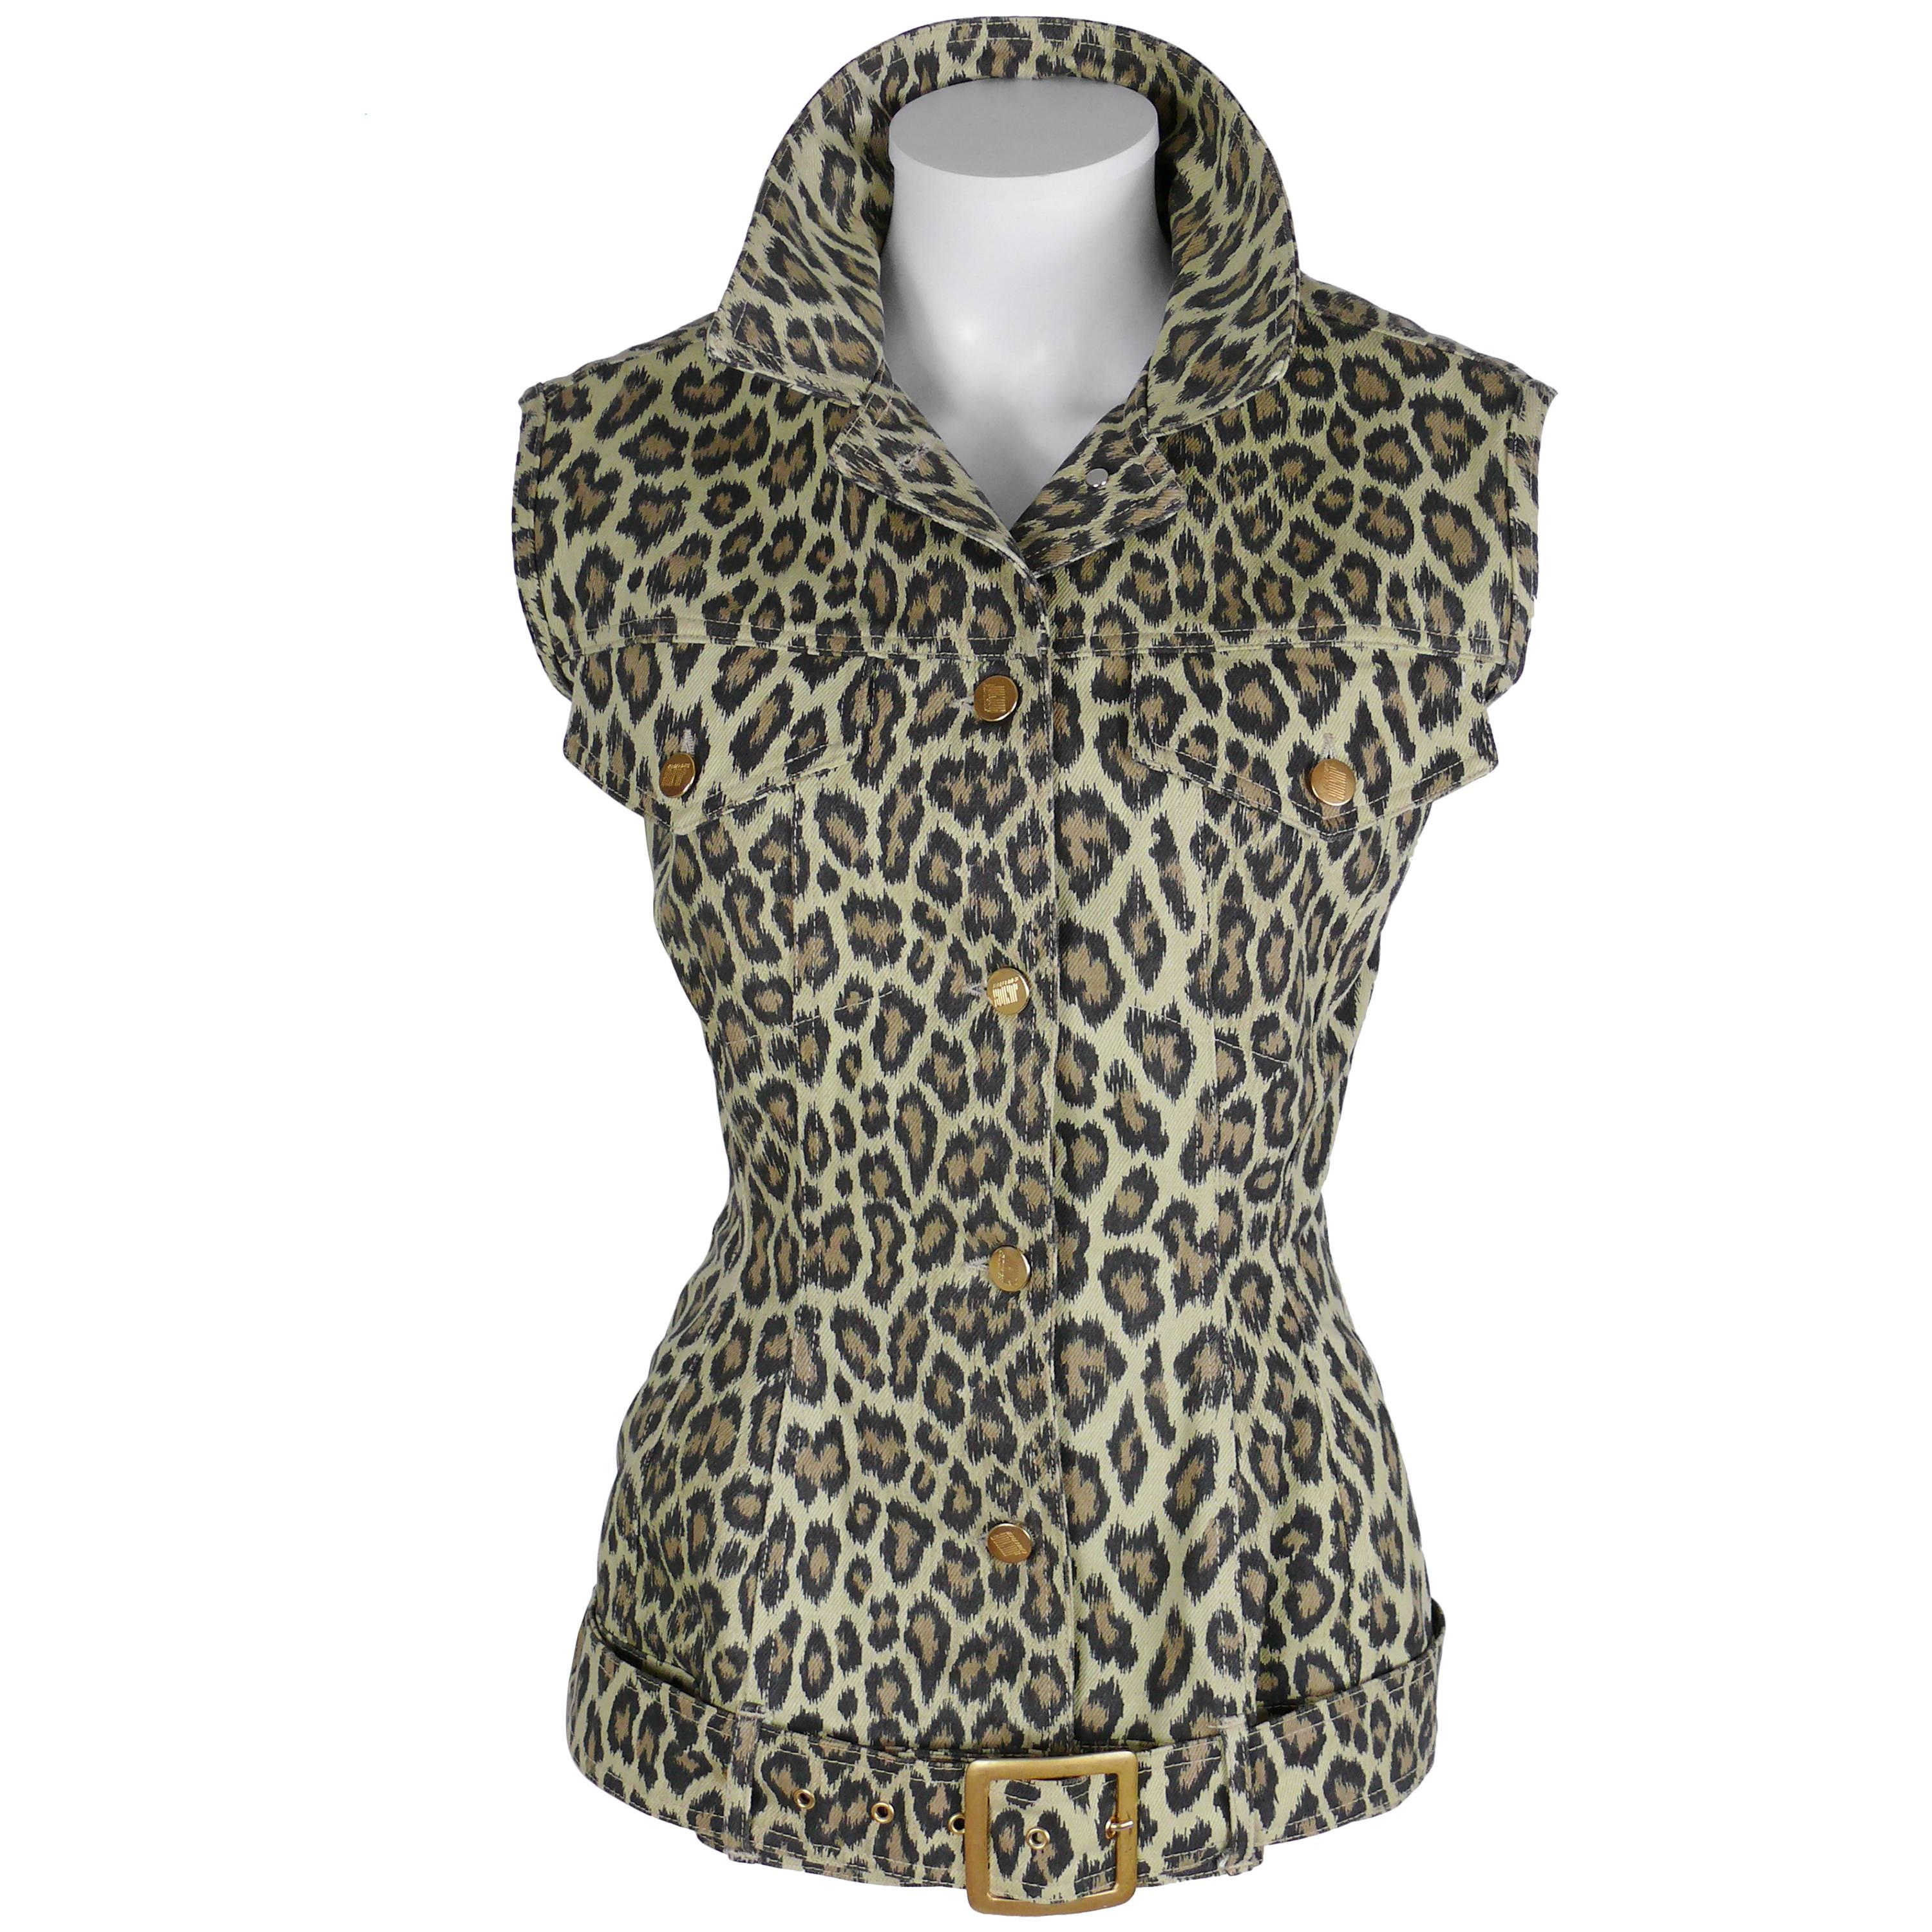 Jean Paul Gaultier Vintage Denim Cheetah Print Corset Jacket